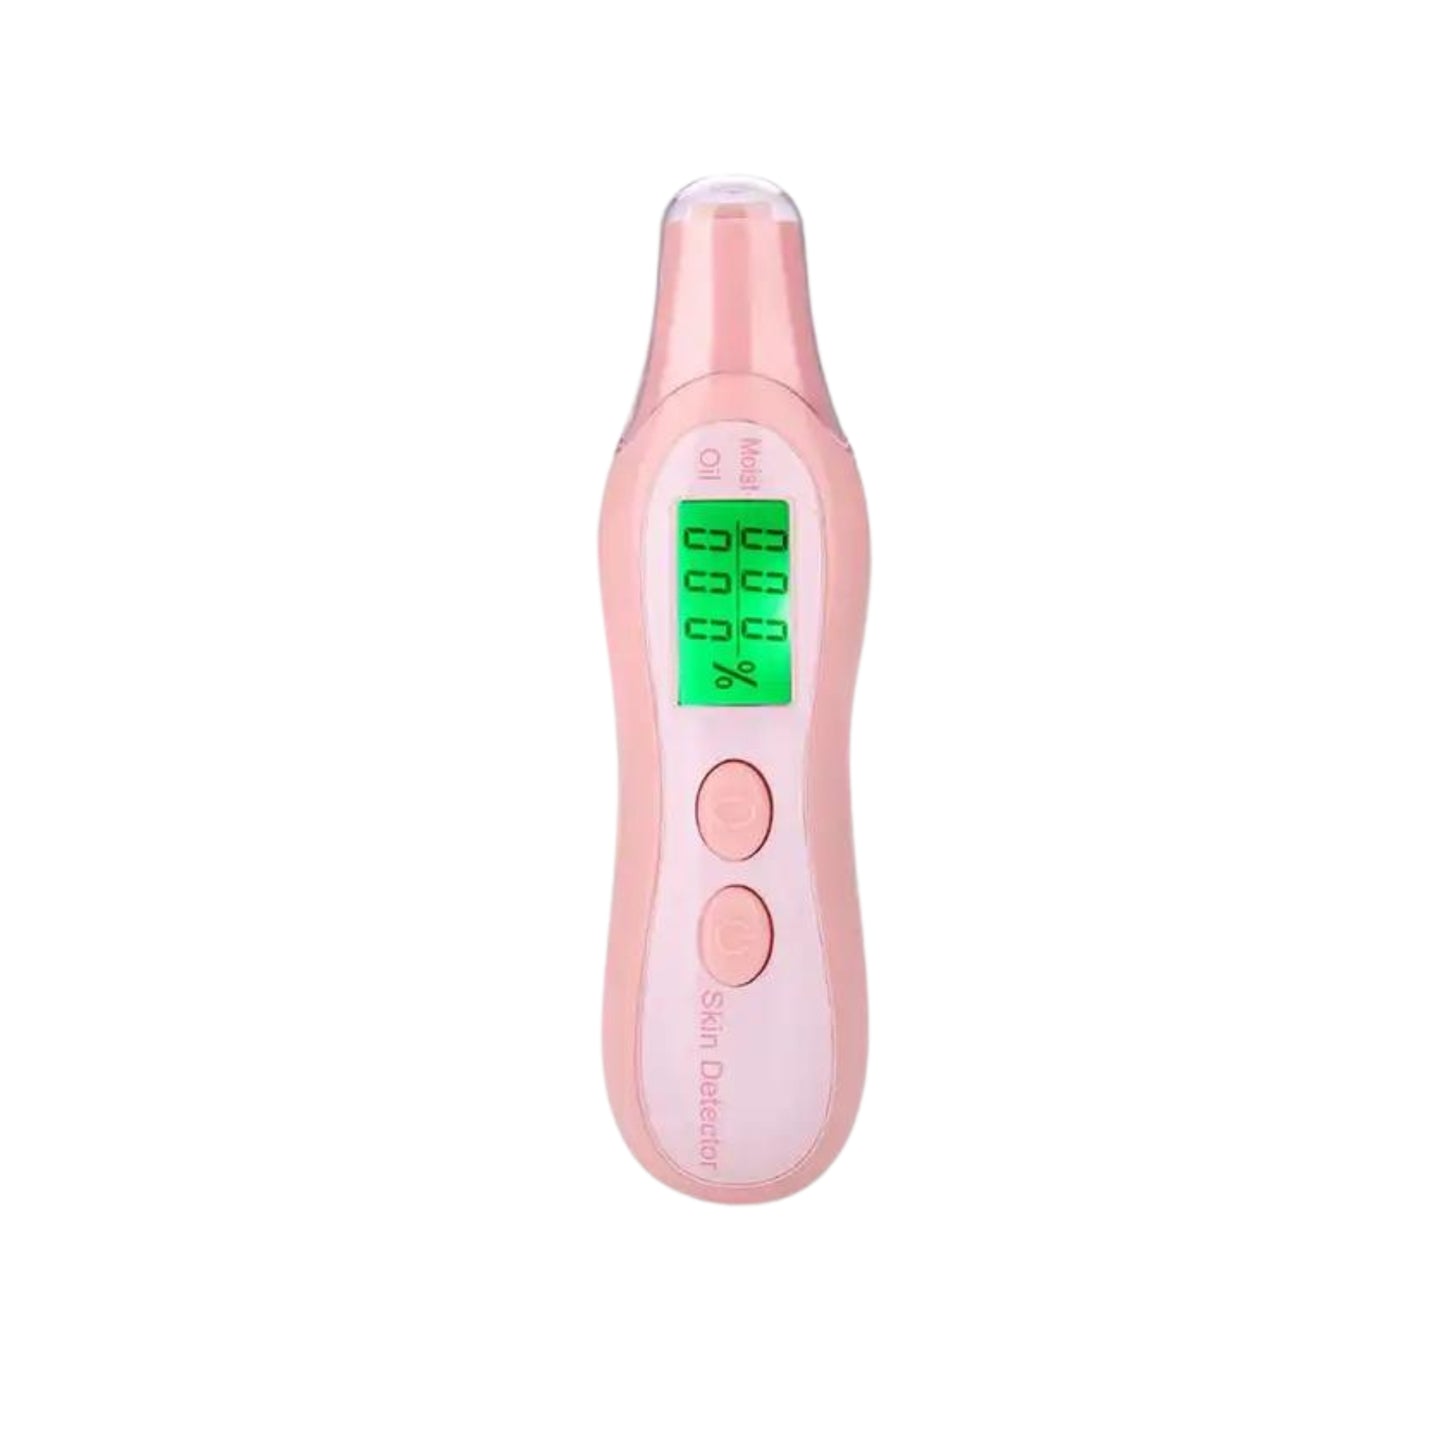 LCD Digital Skin Analyzer, Moisture Water Oil Monitor for Skin Care, High Sensitive Facial Skin Tester USB Digital Measuring Device